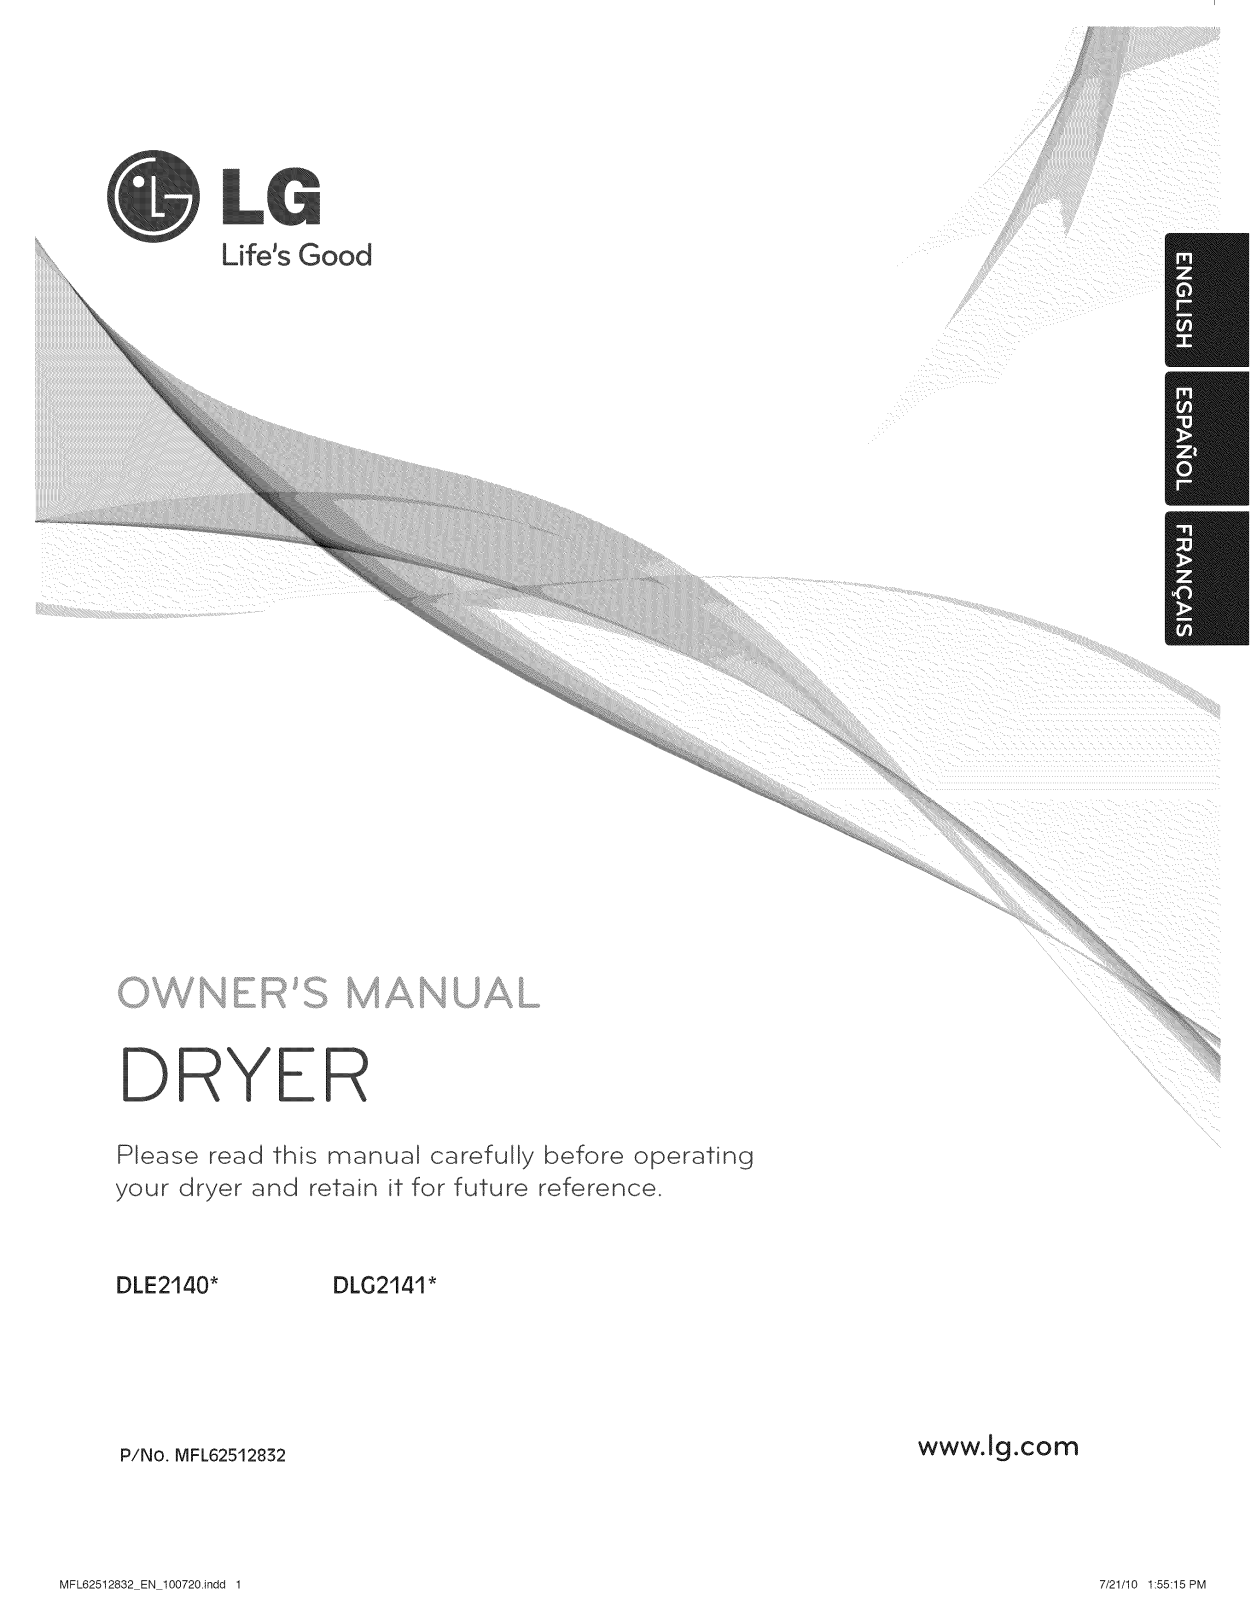 LG DLG2241W Owner’s Manual